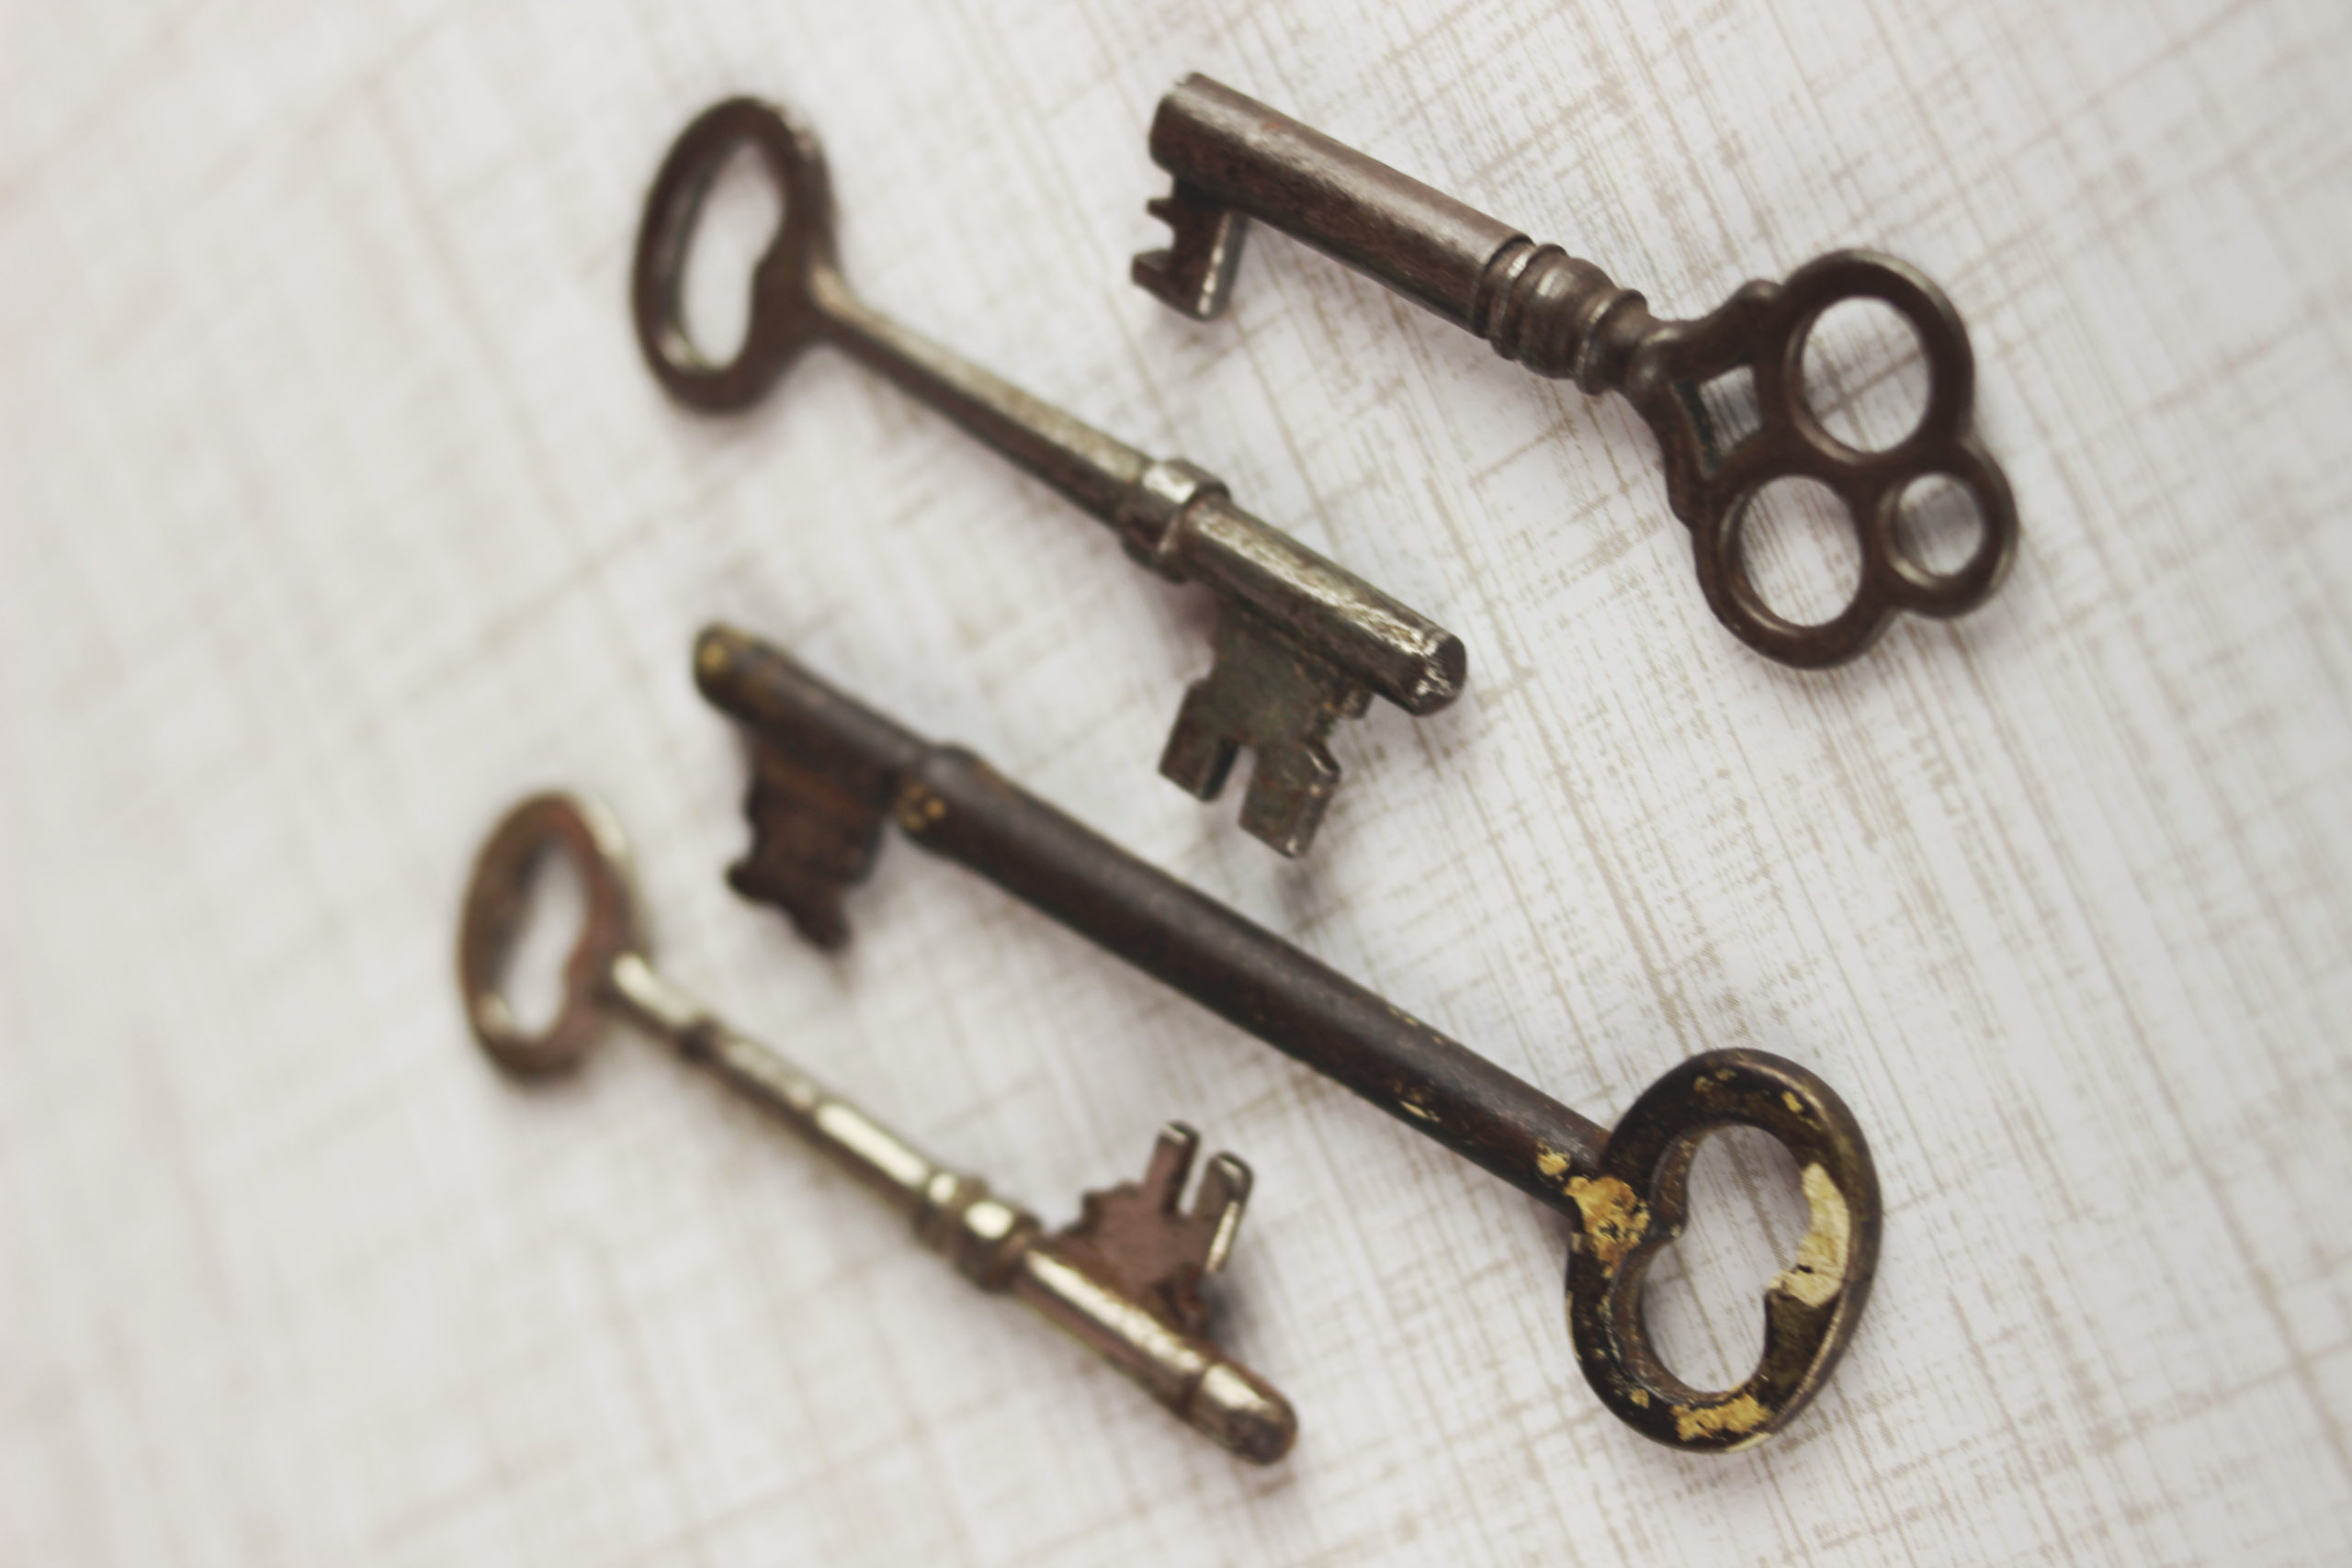 Four old fashioned metal keys.